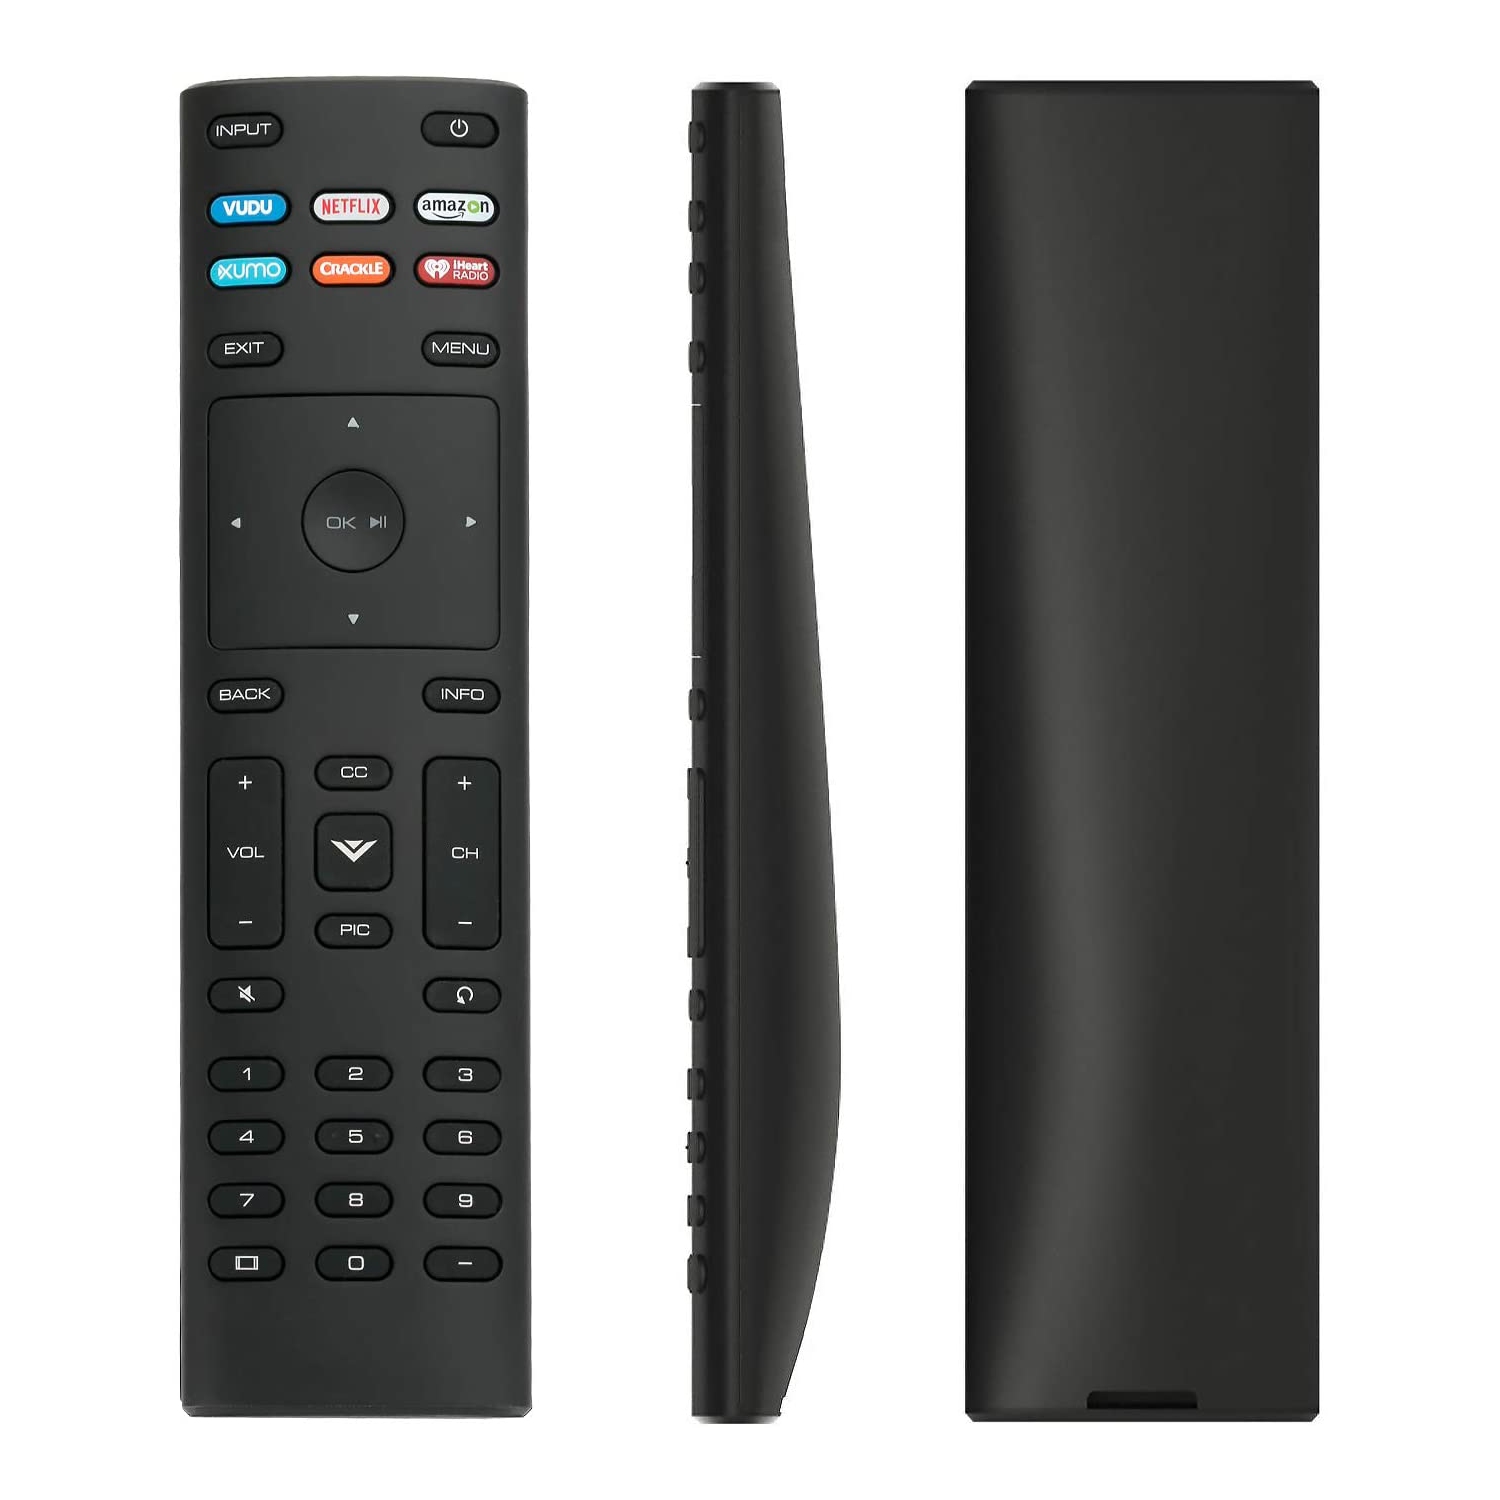 New Remote Control Replacement fit for VIZIO TV D32F-F1 D24F-F1 E70-F3 V705-G3 V505-G9 V605-G3 V555-G1 V405-G9 V655-G9